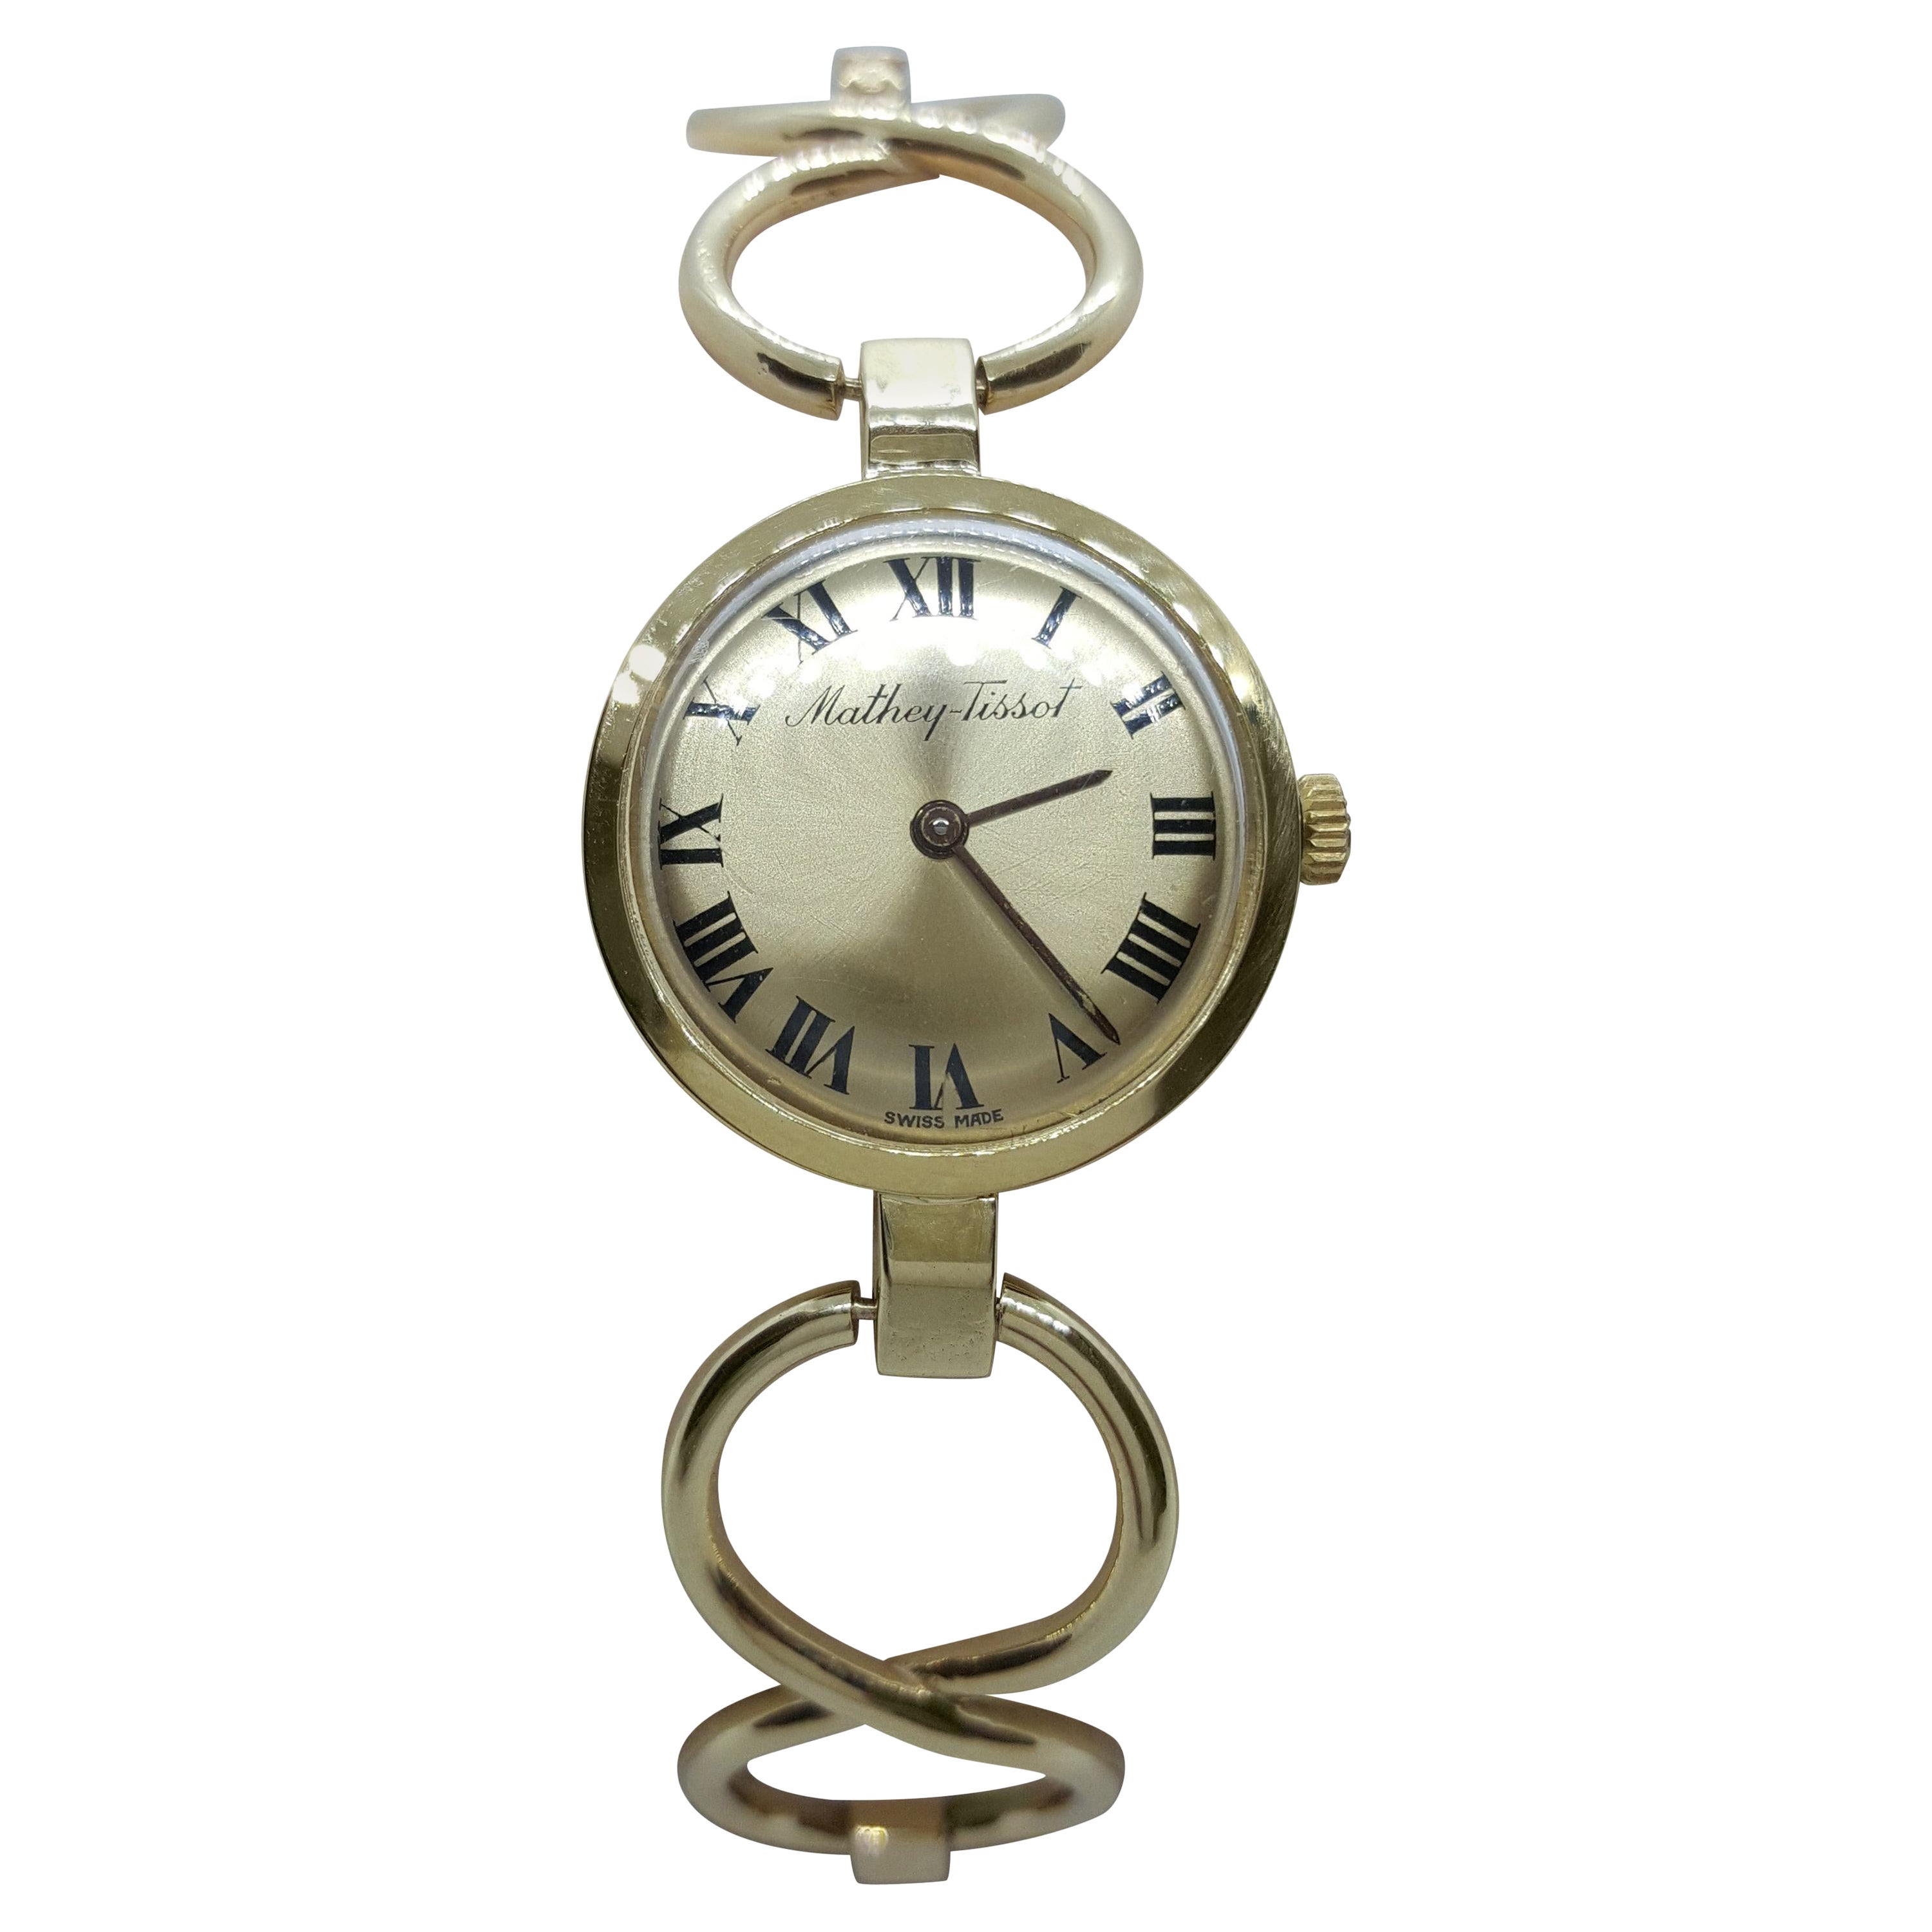 Ladies 18kt Yellow Gold Mathey-Tissot Watch, #3560625, Manual